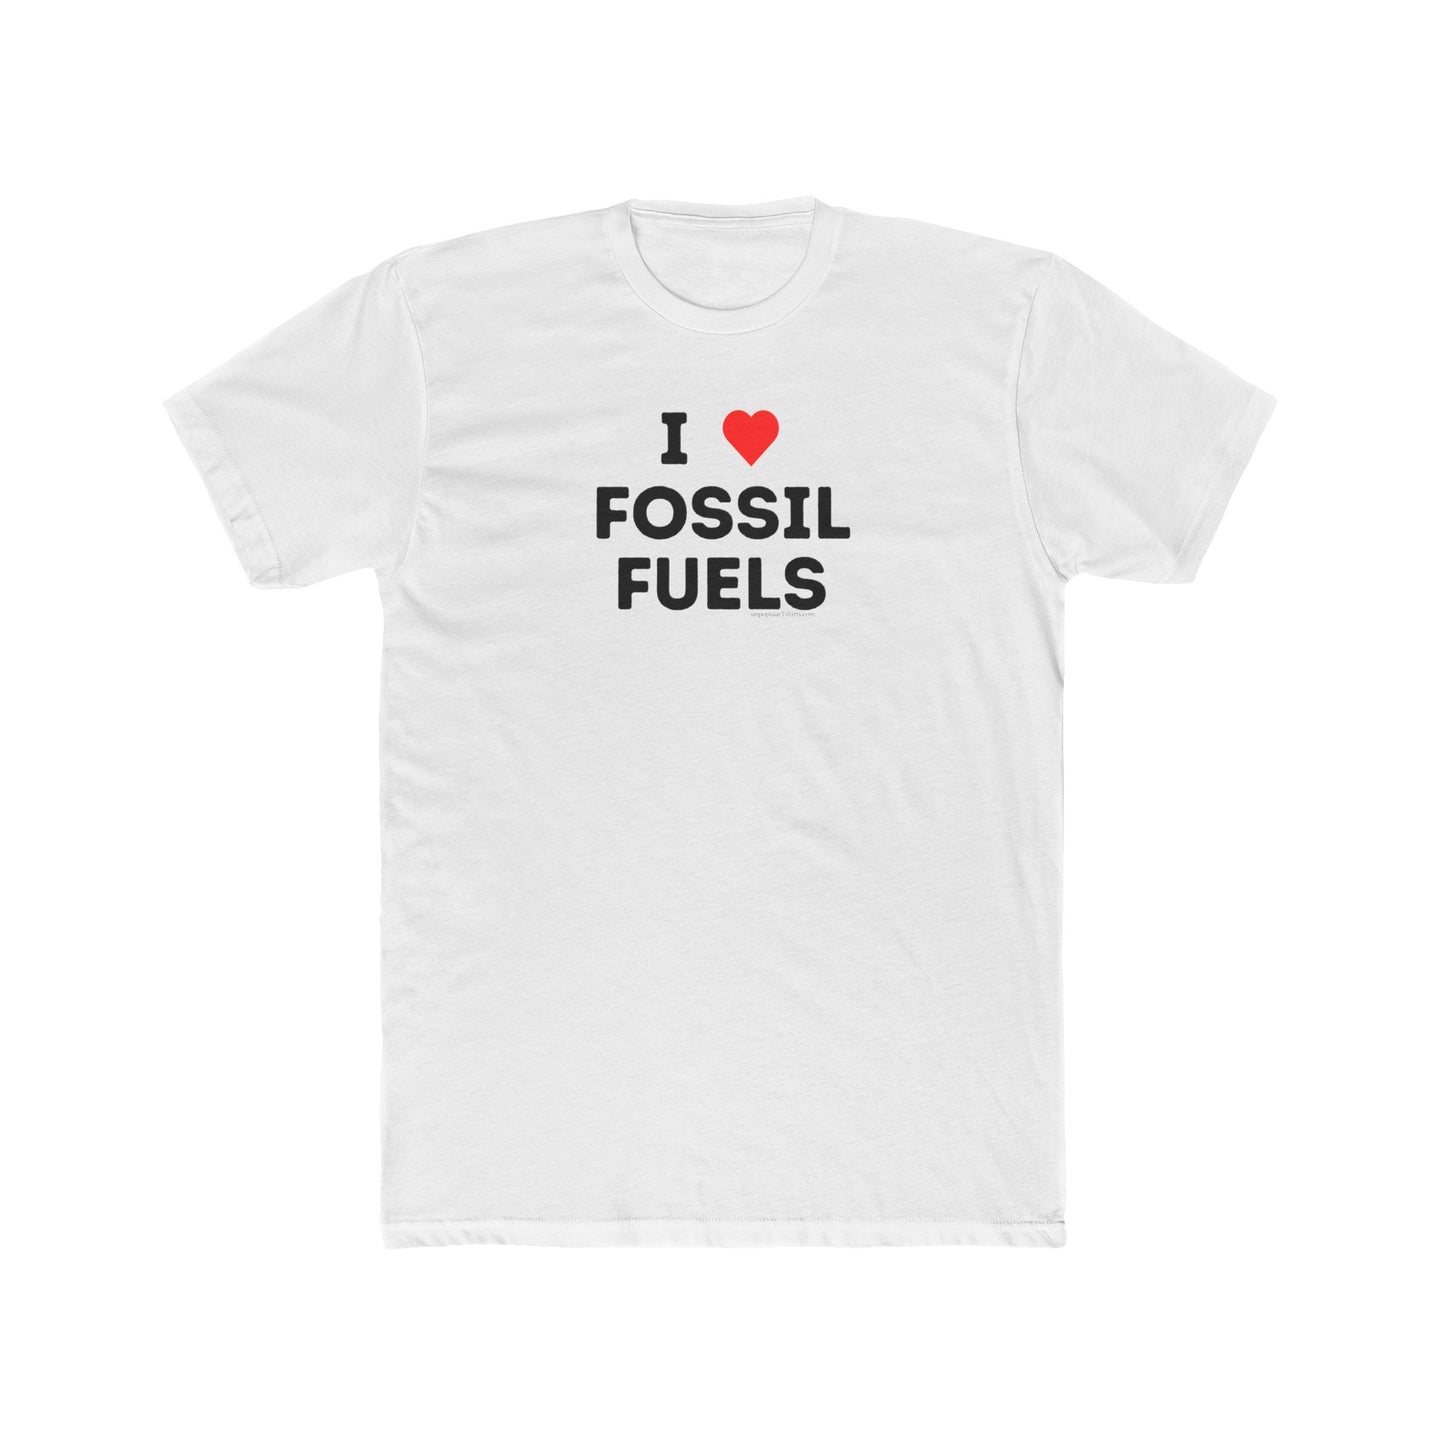 I Love Fossil Fuels - Ultra Soft Tee